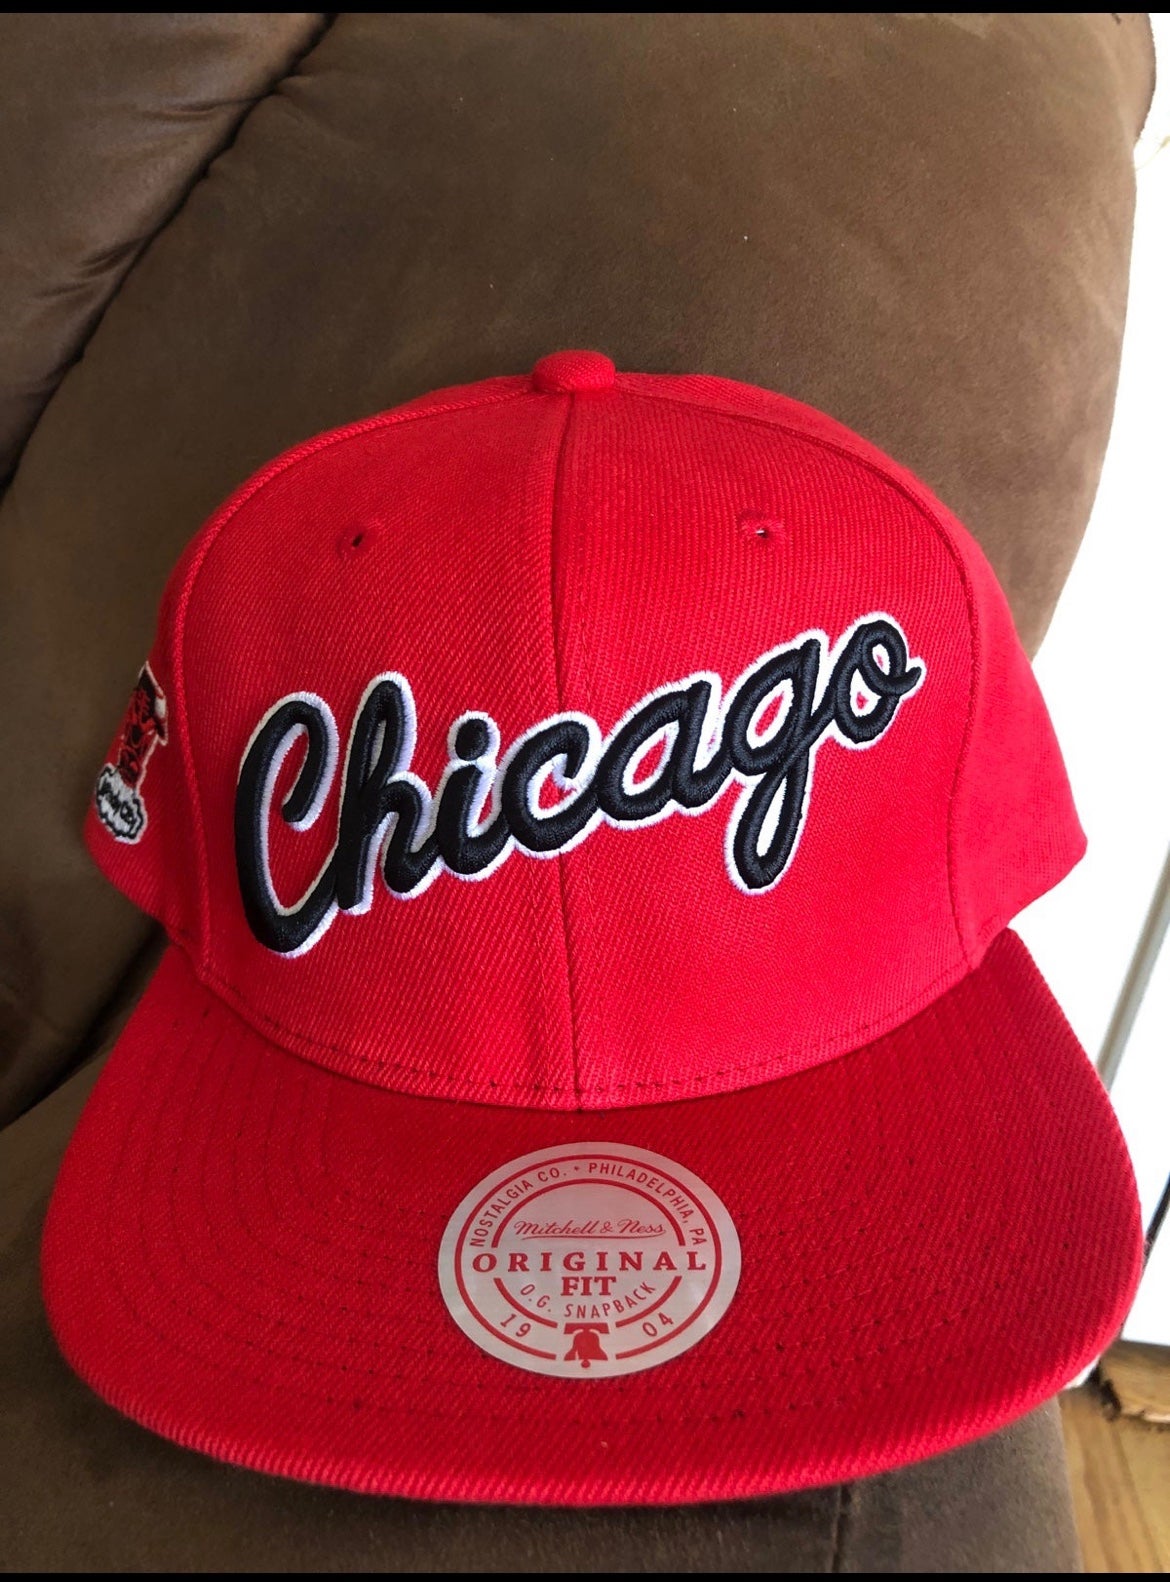 CHICAGO BULLS WORDMARK AND LOGO SNAPBACK HAT(BLACK) - SBL Headwear & Socks